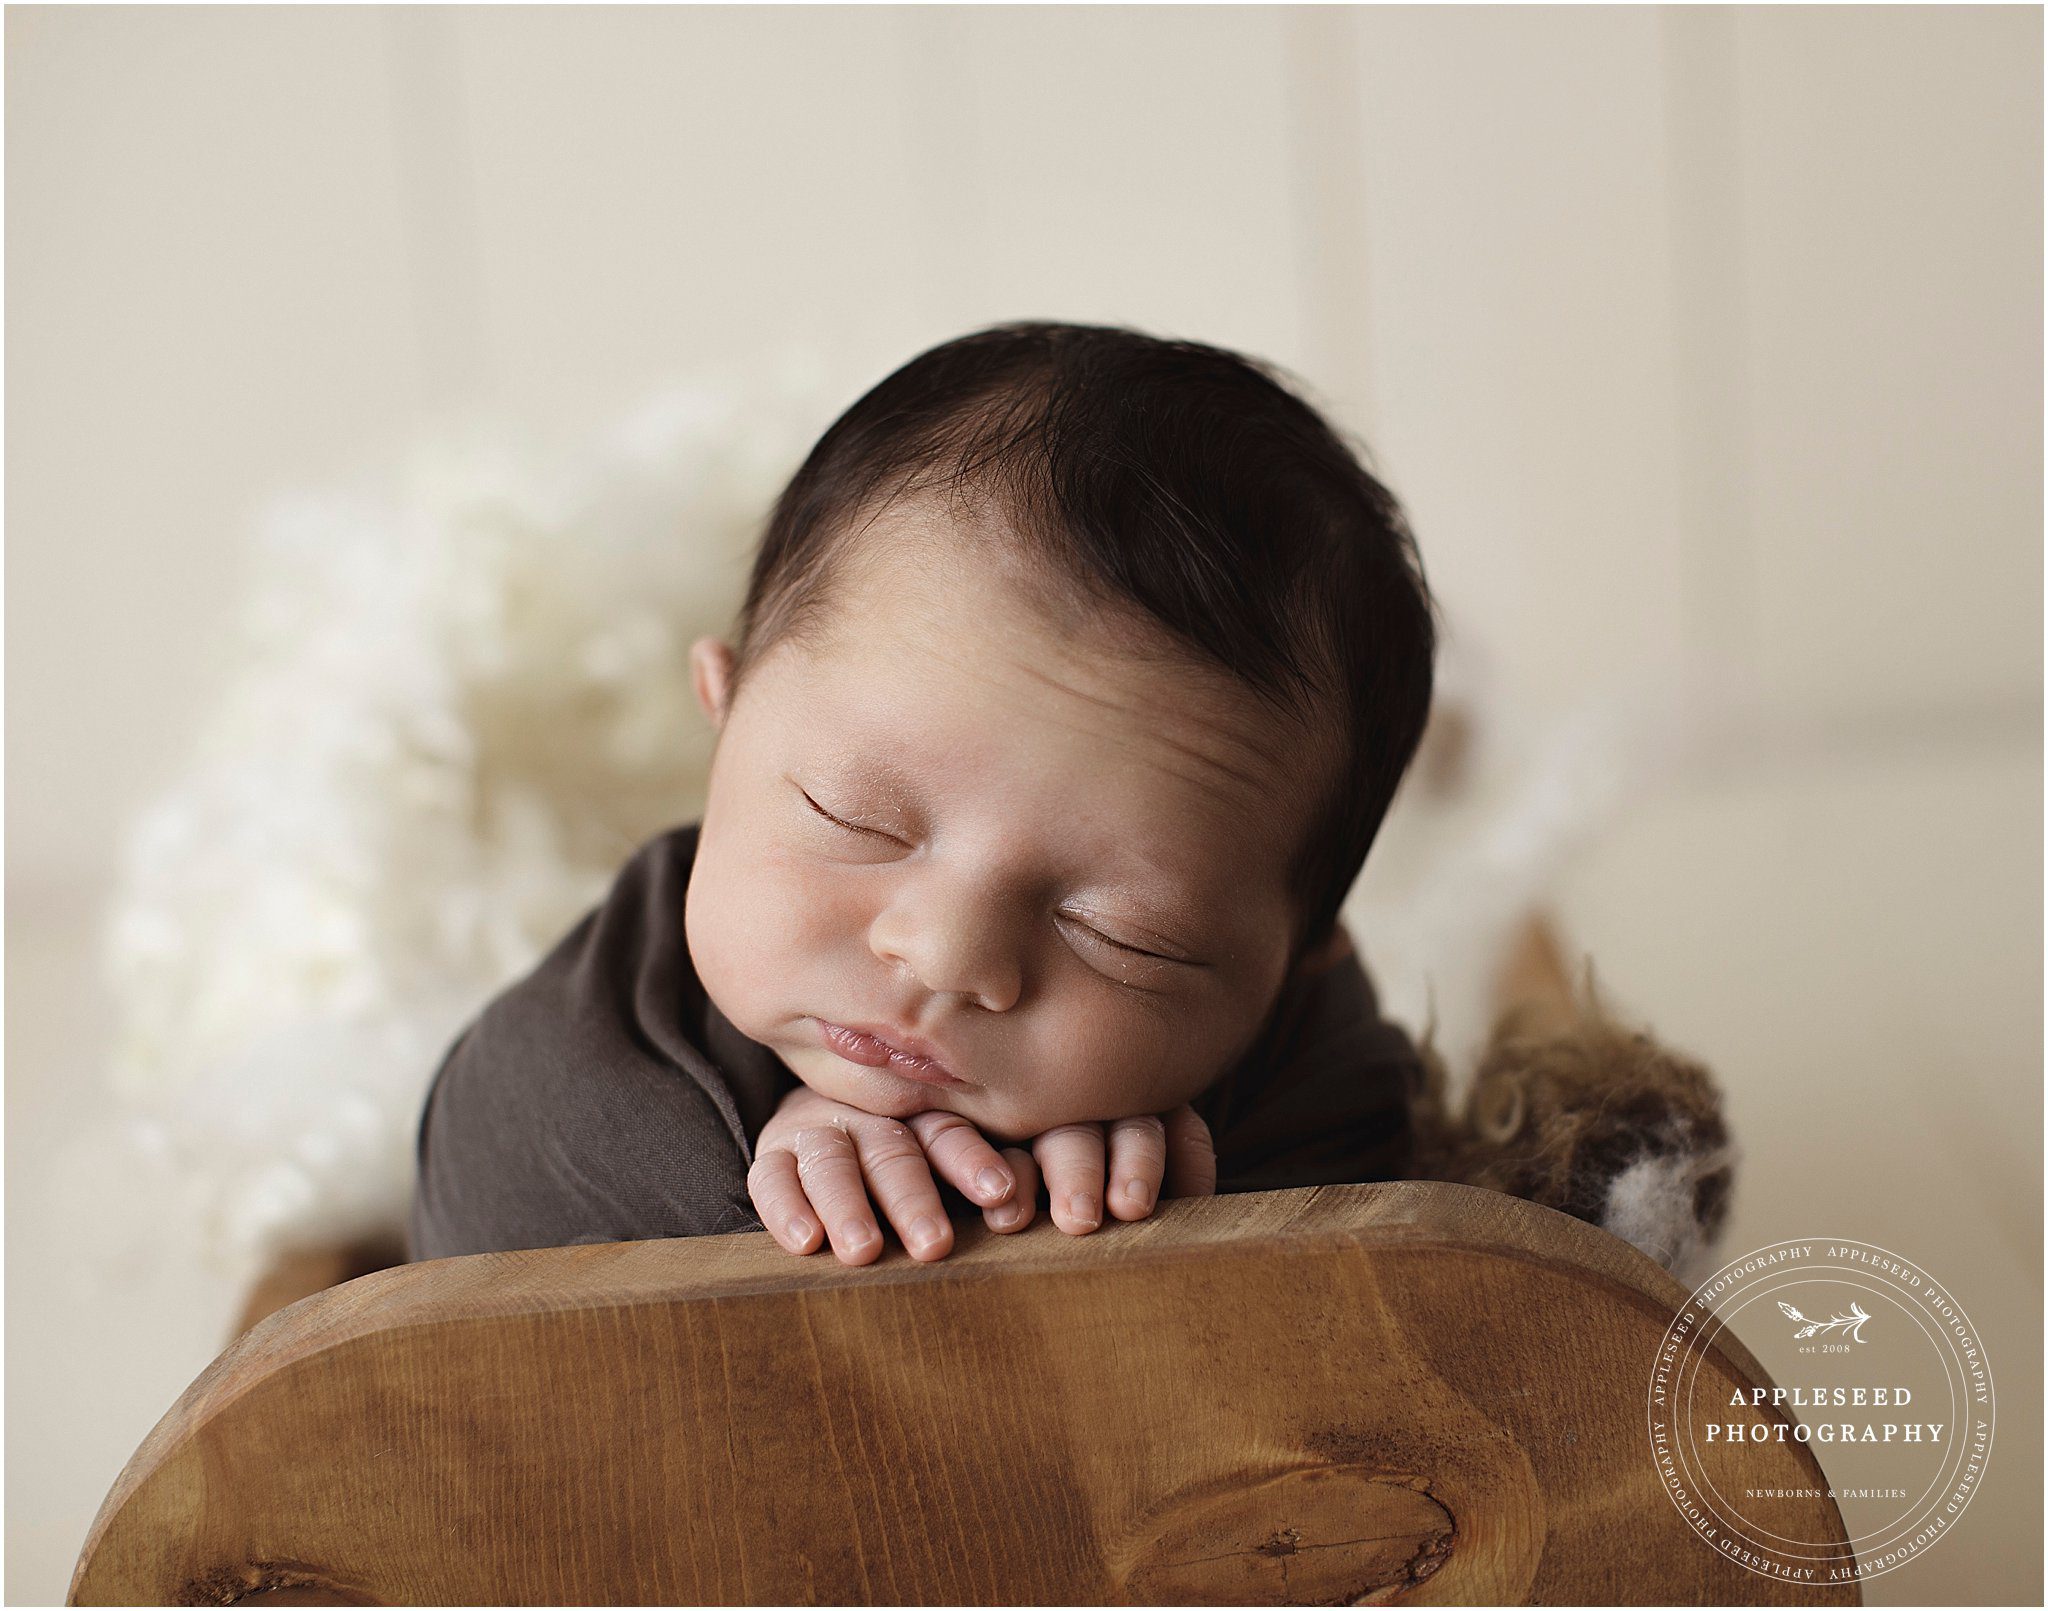 Julian | Newborn Photographer Atlanta | Appleseed Photography